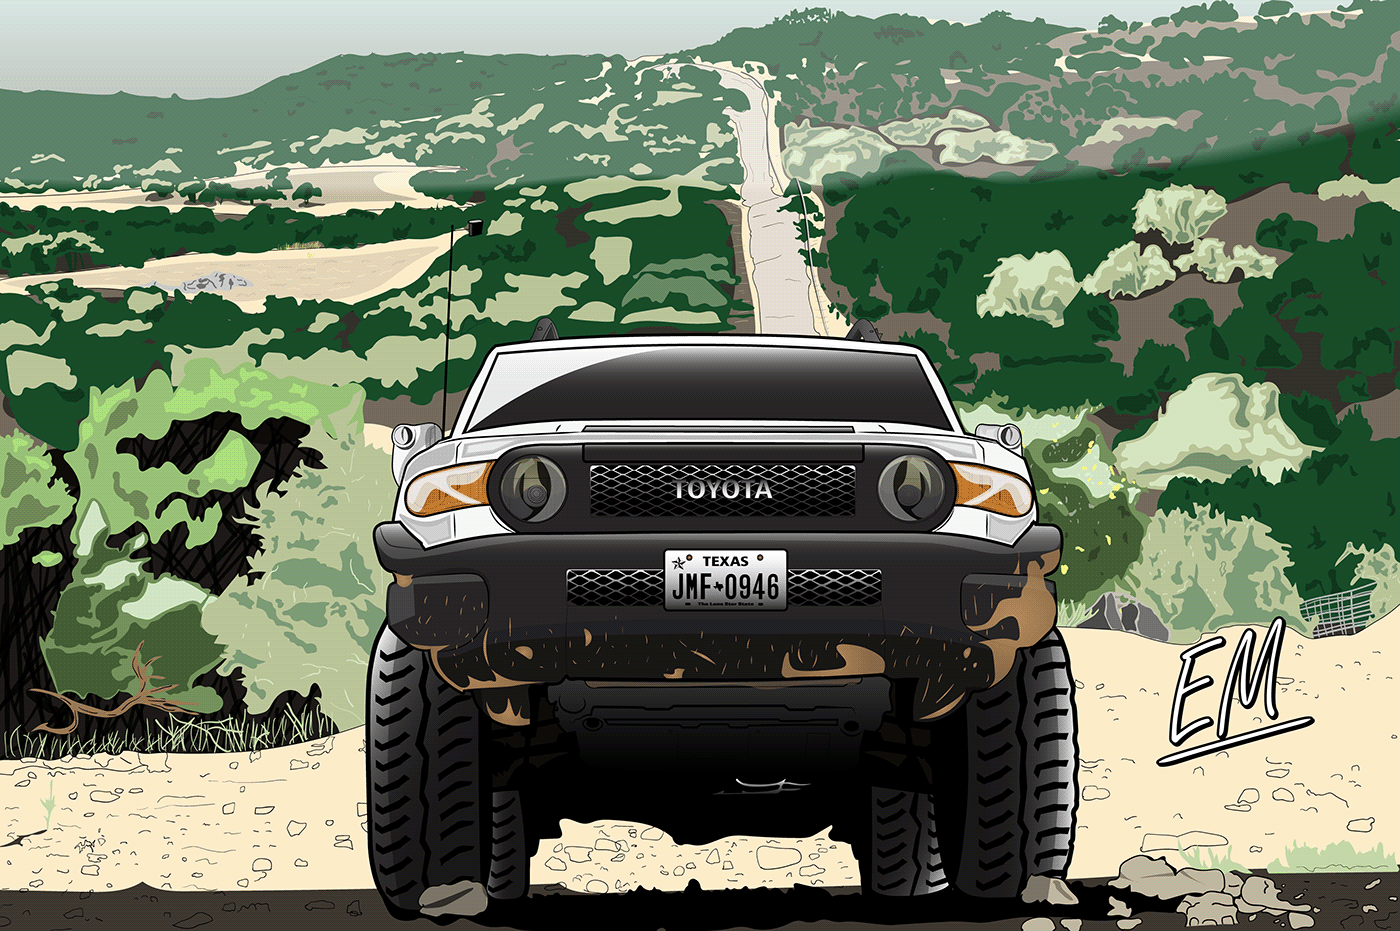 toyota Toyota FJ Cruiser ILLUSTRATION  Truck Illustrations fiverr 4x4 Landscape Illustrator Client texas